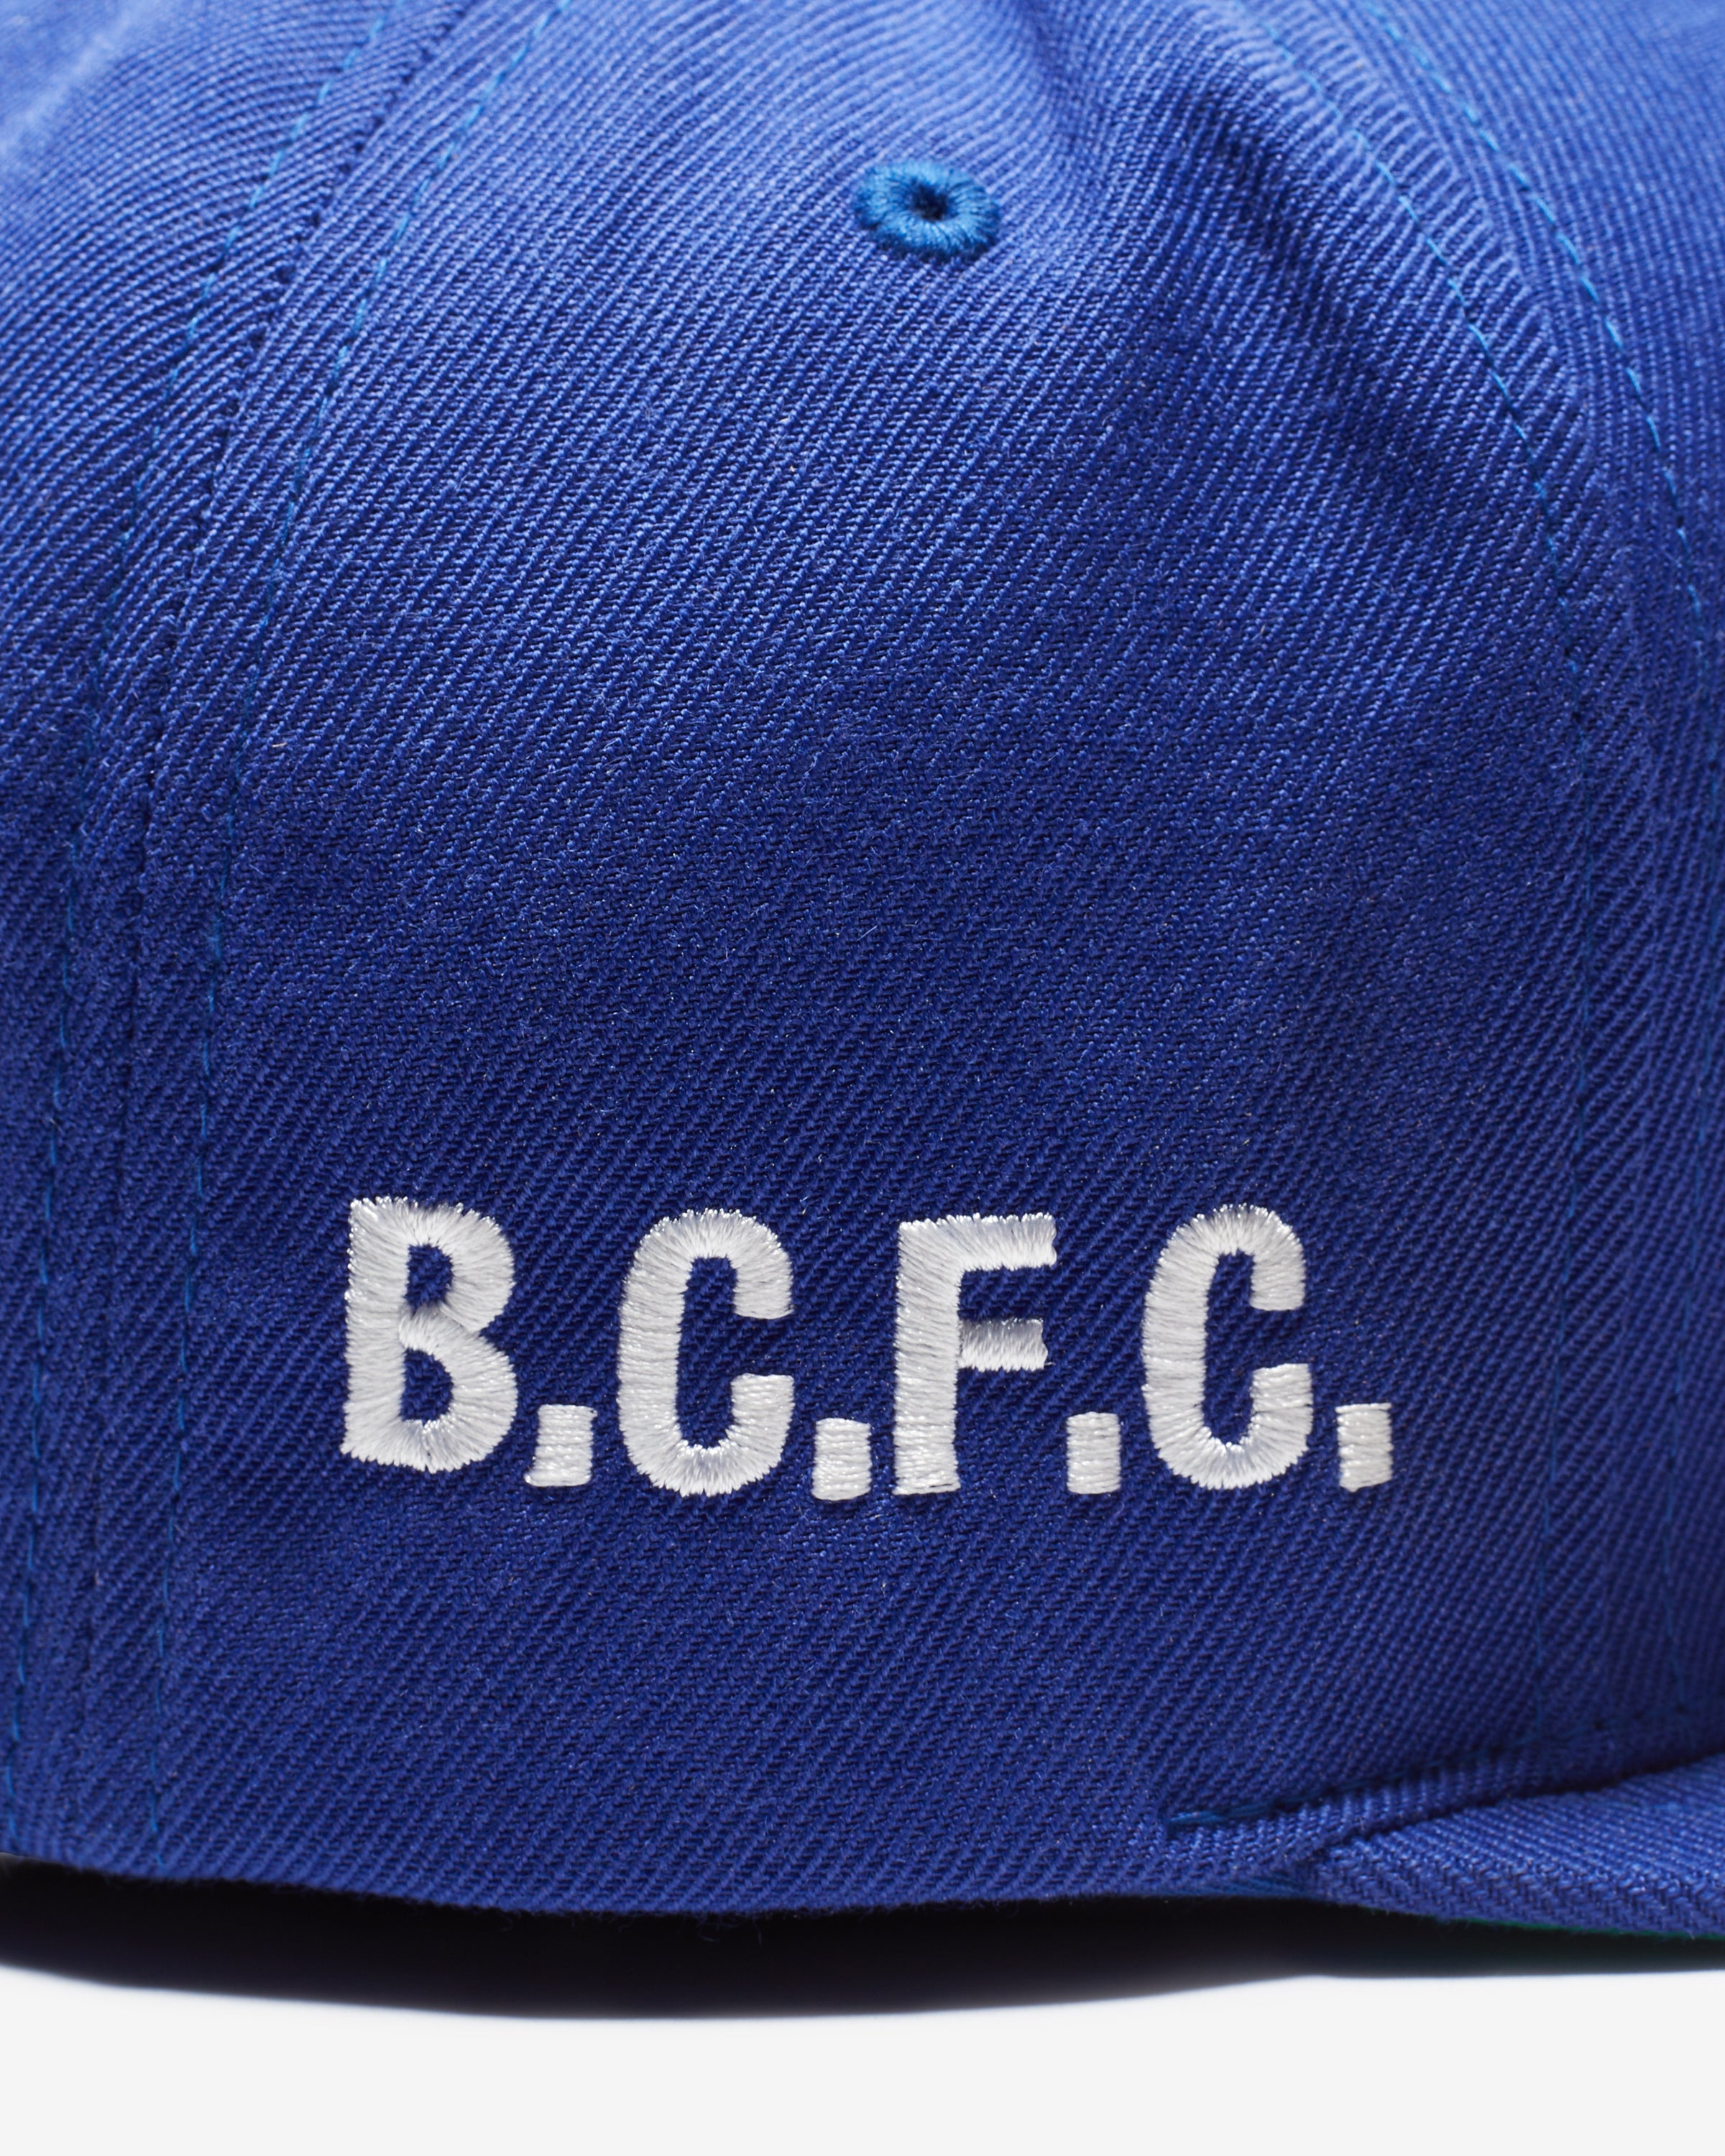 UNDEFEATED X BCFC SNAPBACK - BLUE